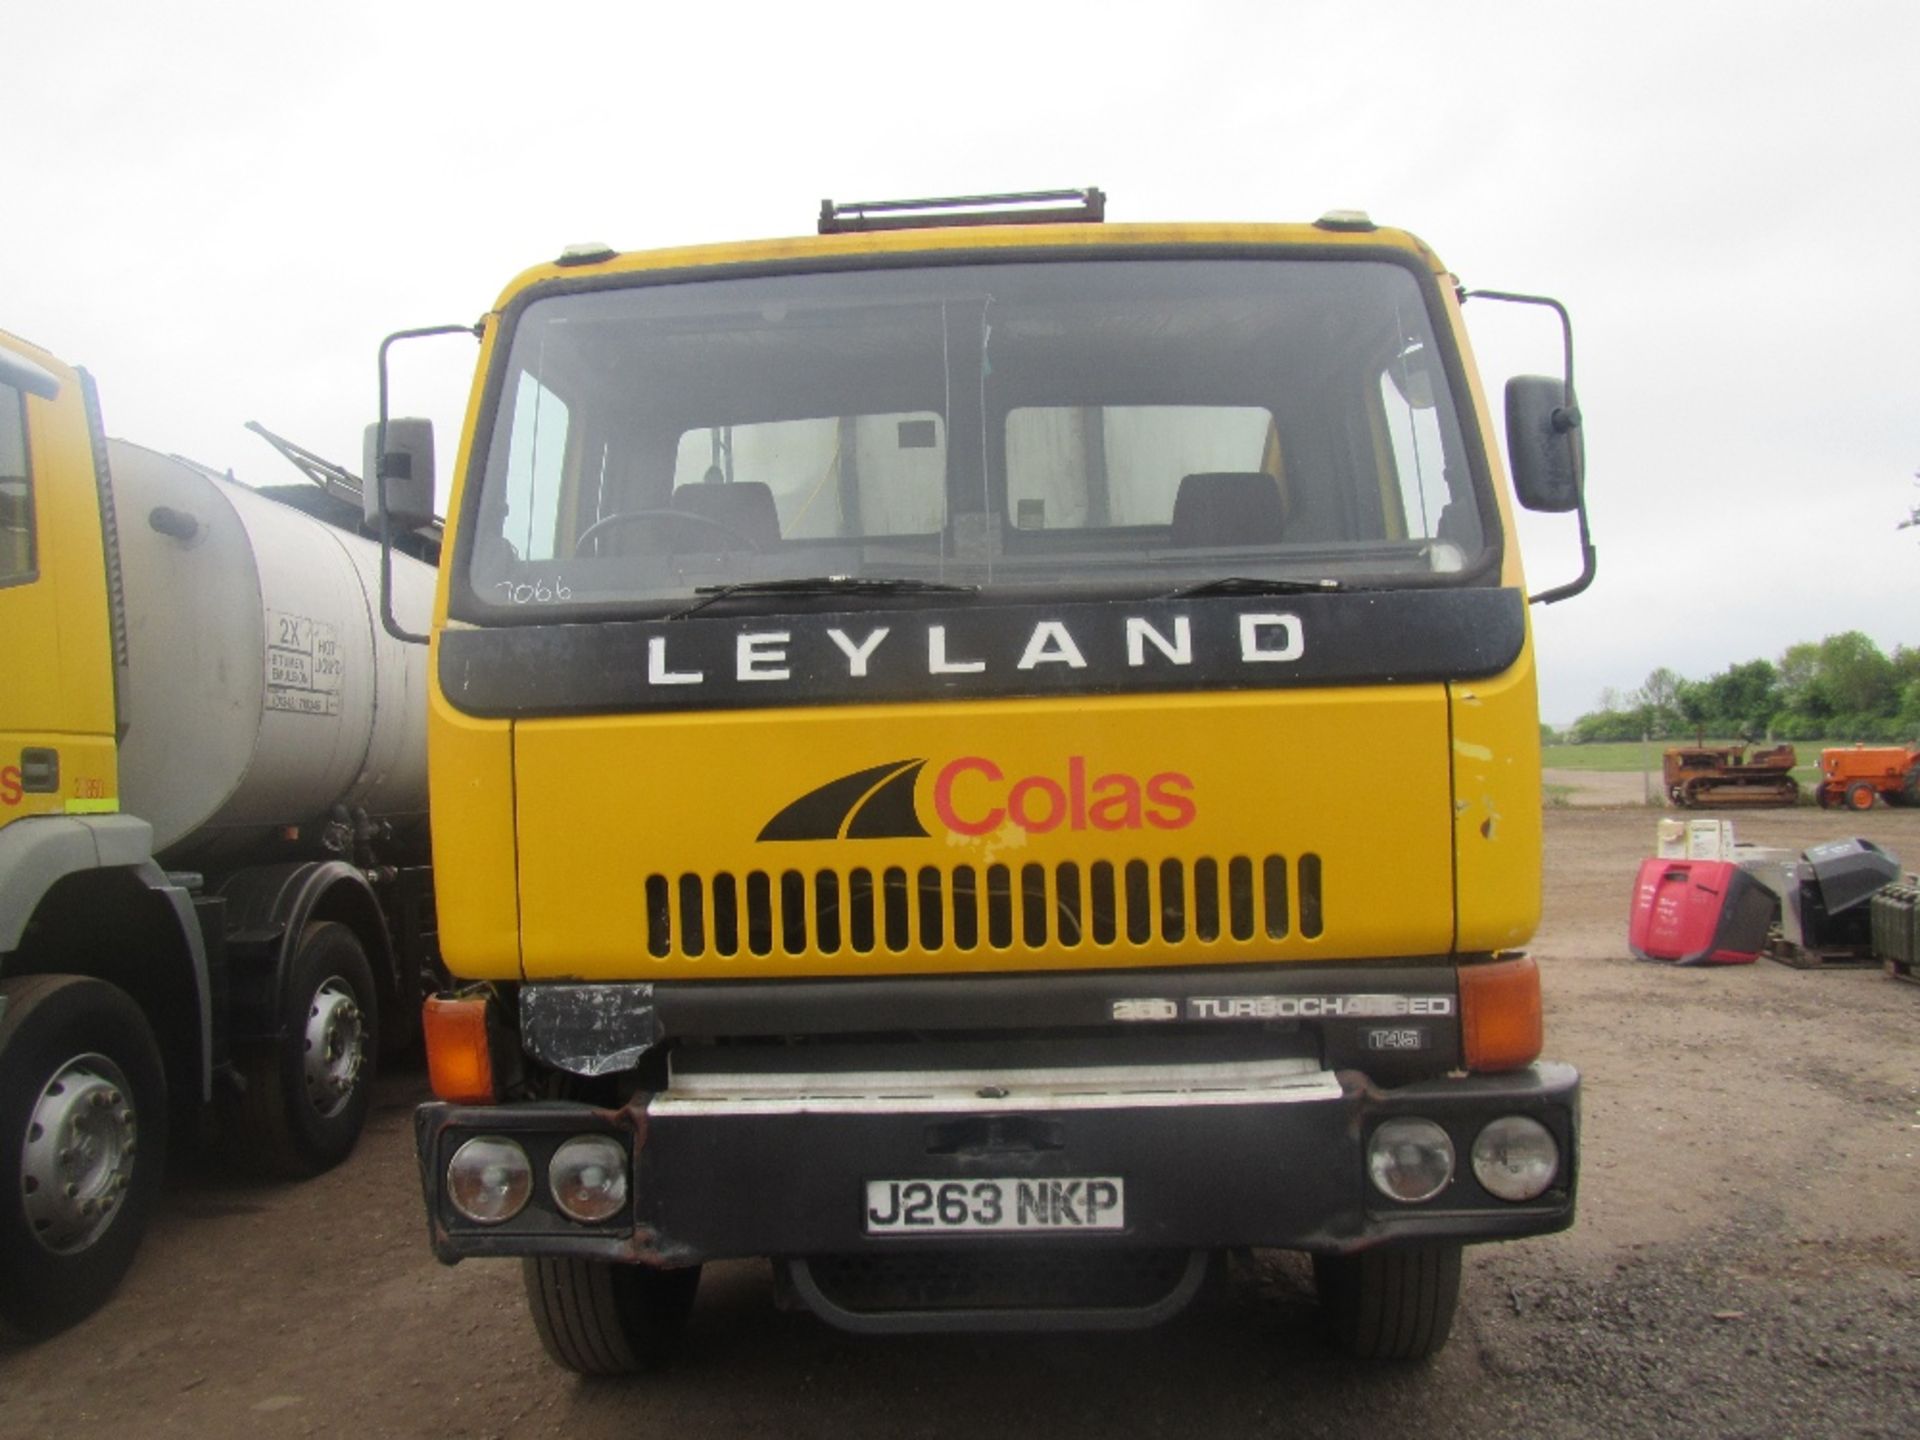 Leyland 8x4 18600 ltr Tar Sprayer c/w bitumen tank, pheonix variable width spray Reg. No. J263 NKP - Image 2 of 8